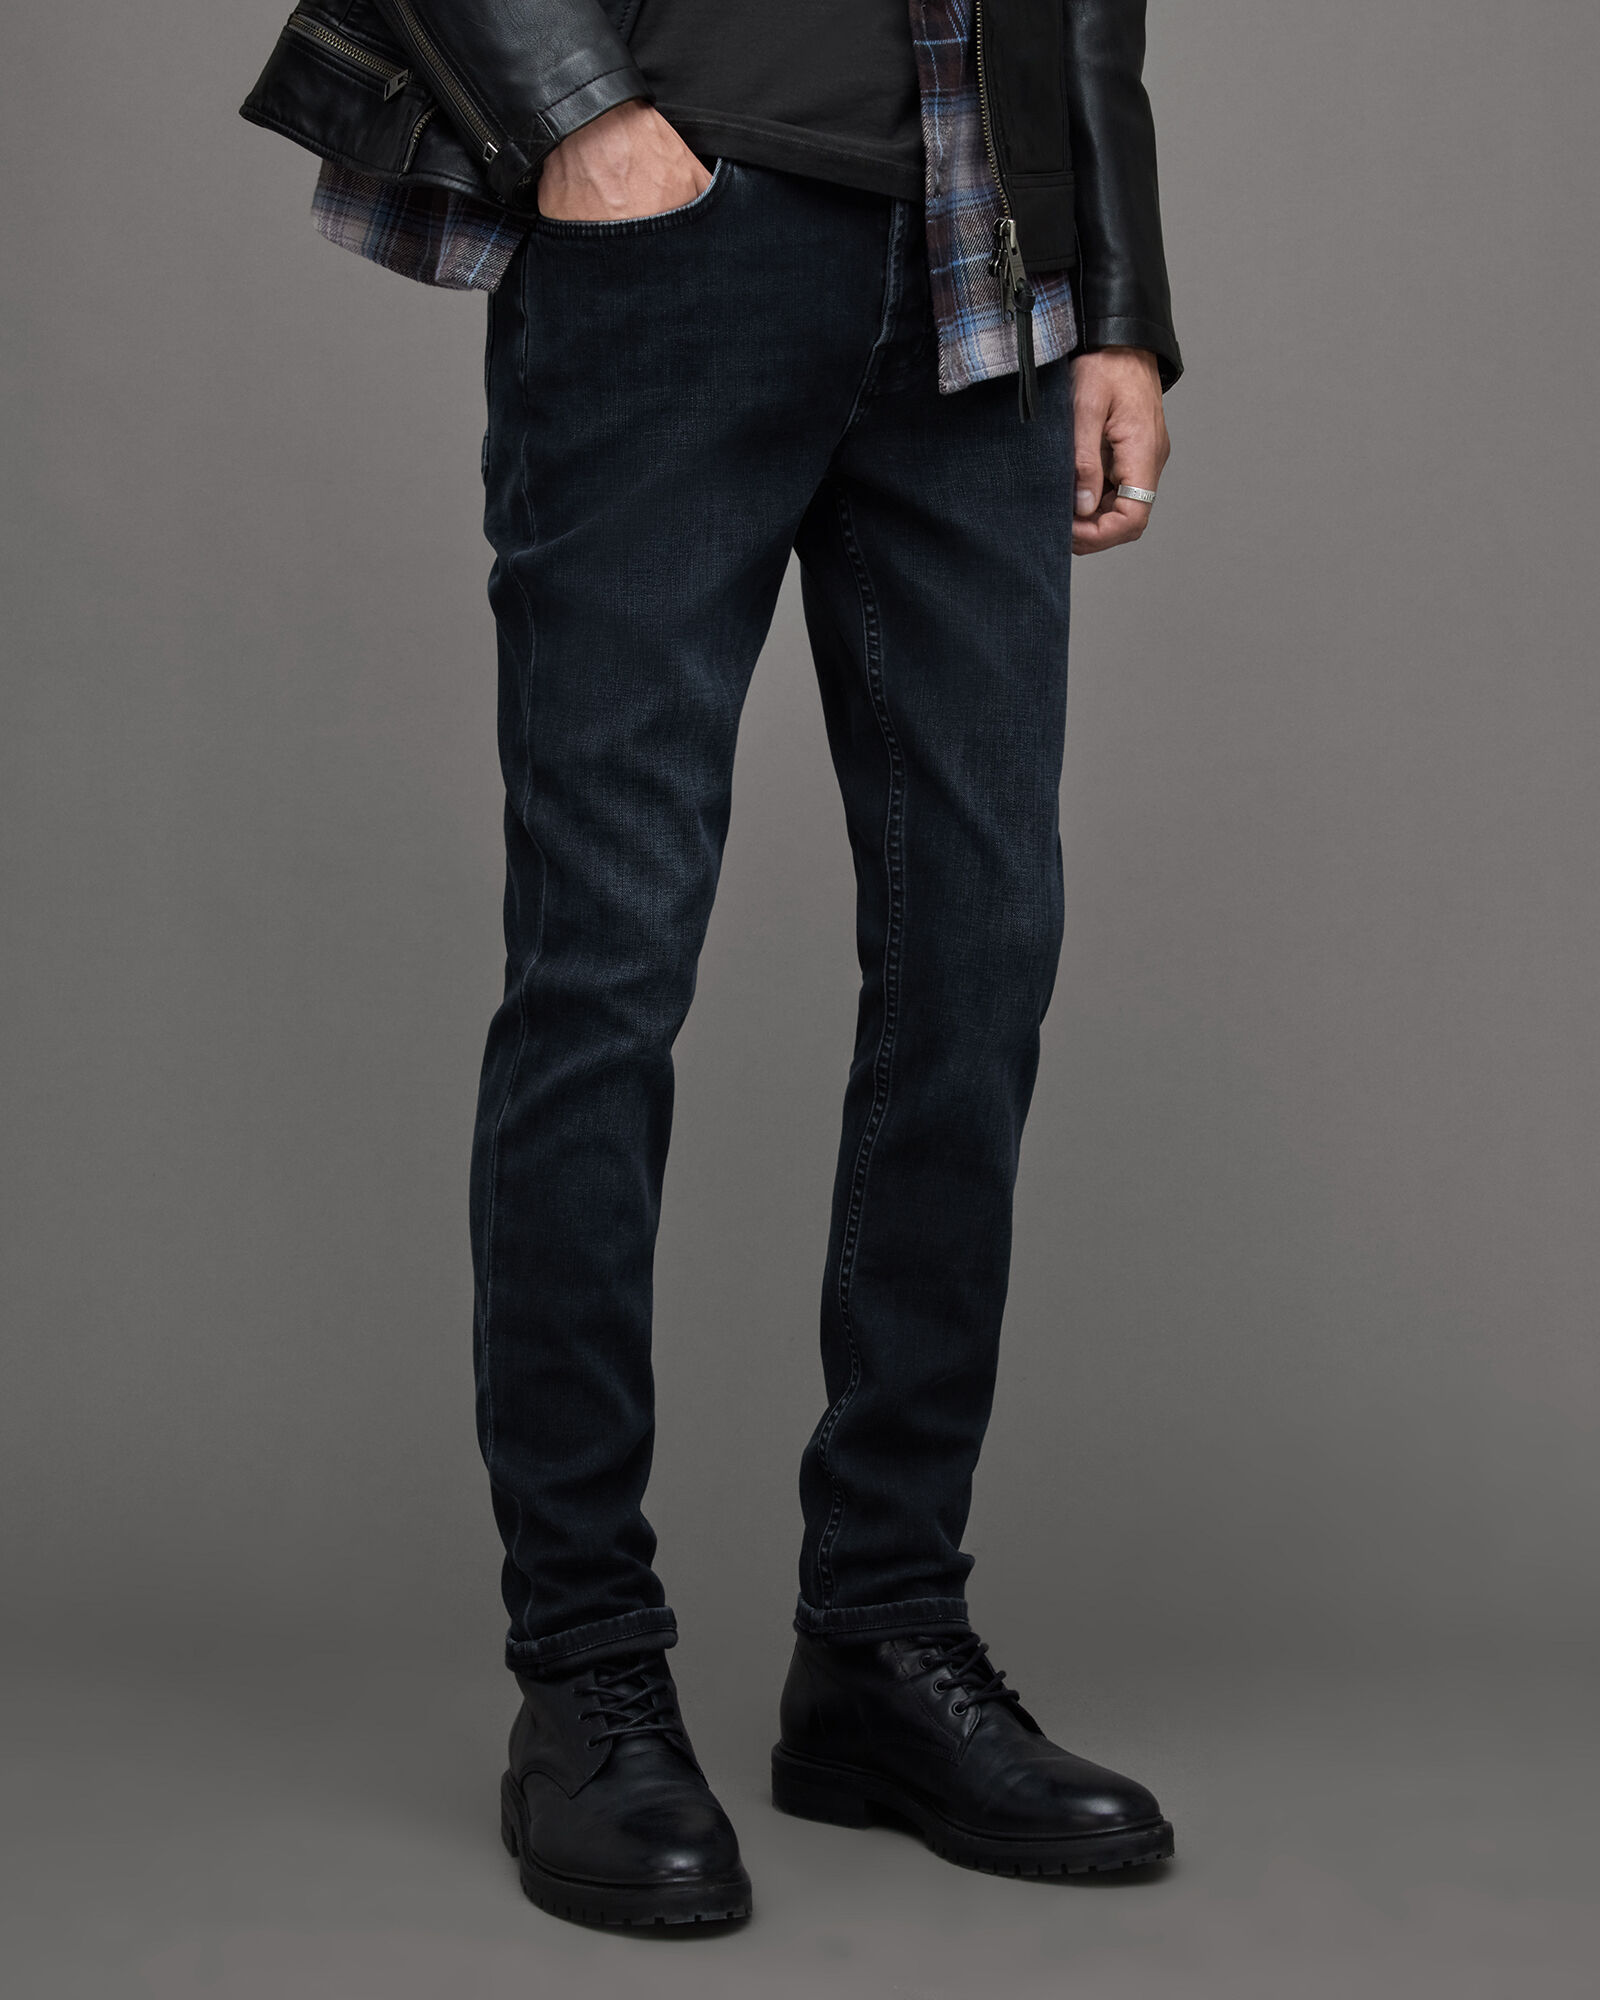 Buy Men's Regular Fit Jeans Online At Best Price From Daraz.com.np